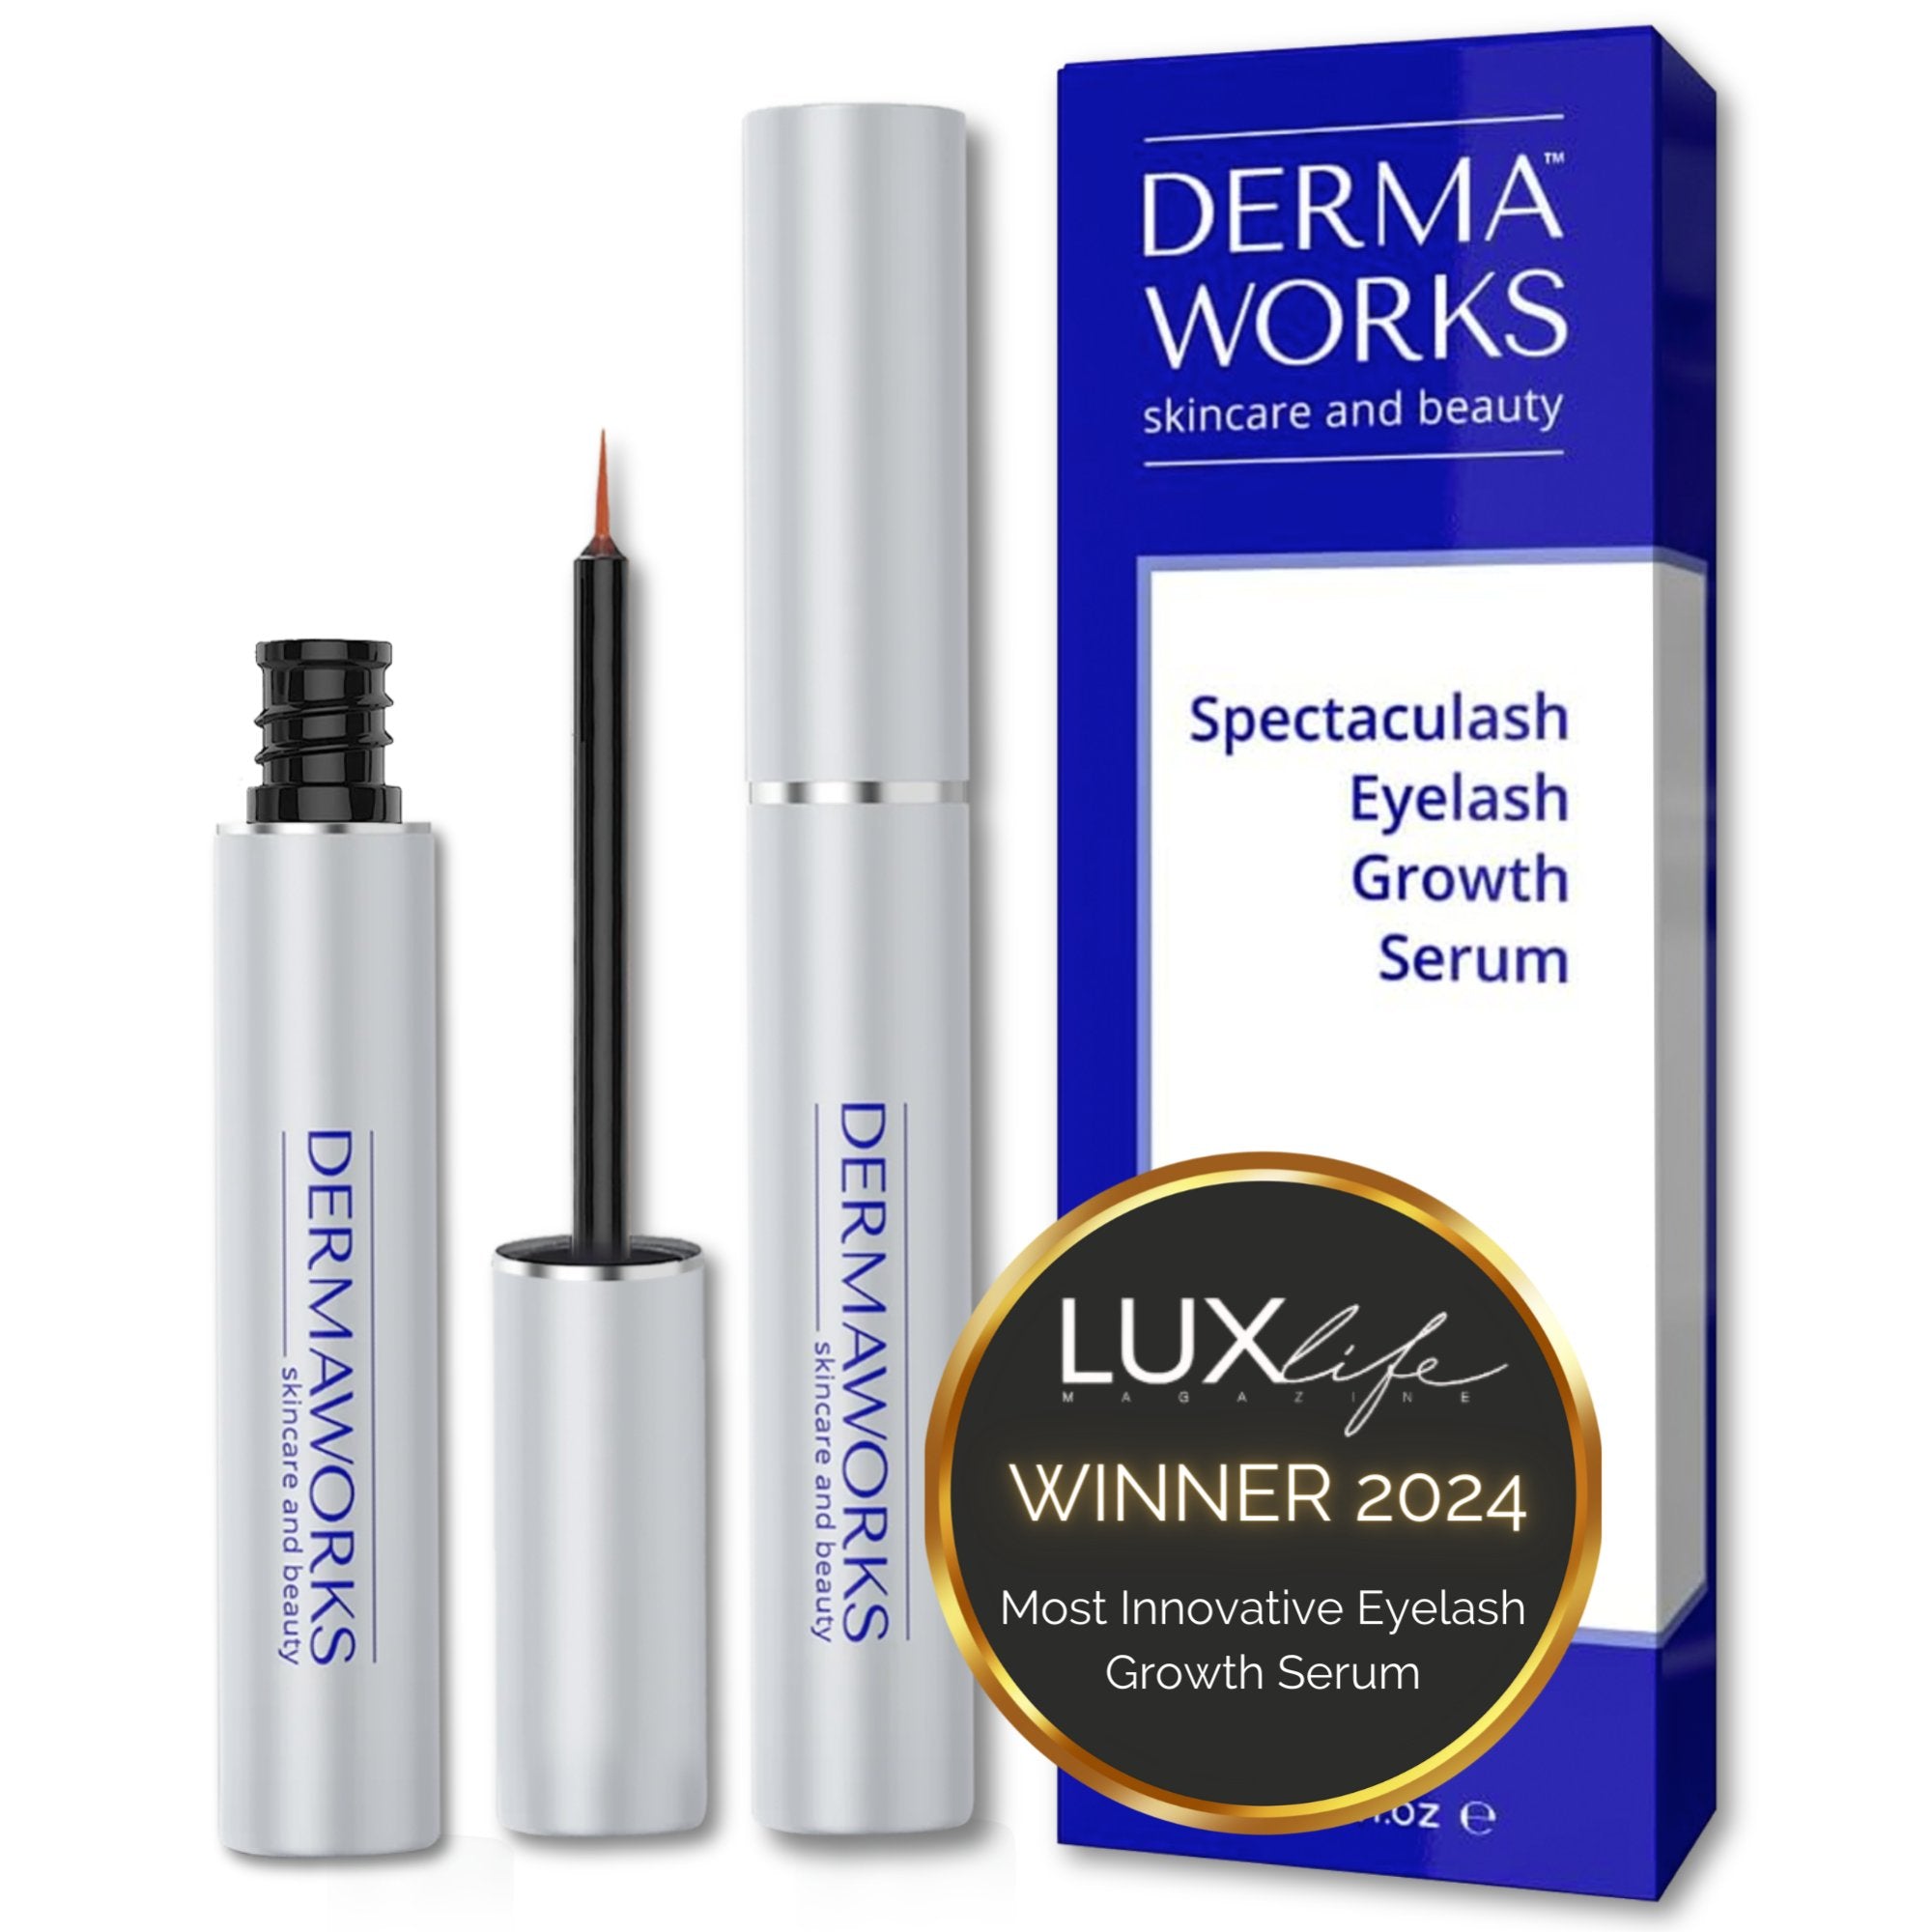 Spectaculash advanced eyelash growth serum by Dermaworks Skincare and Beauty.